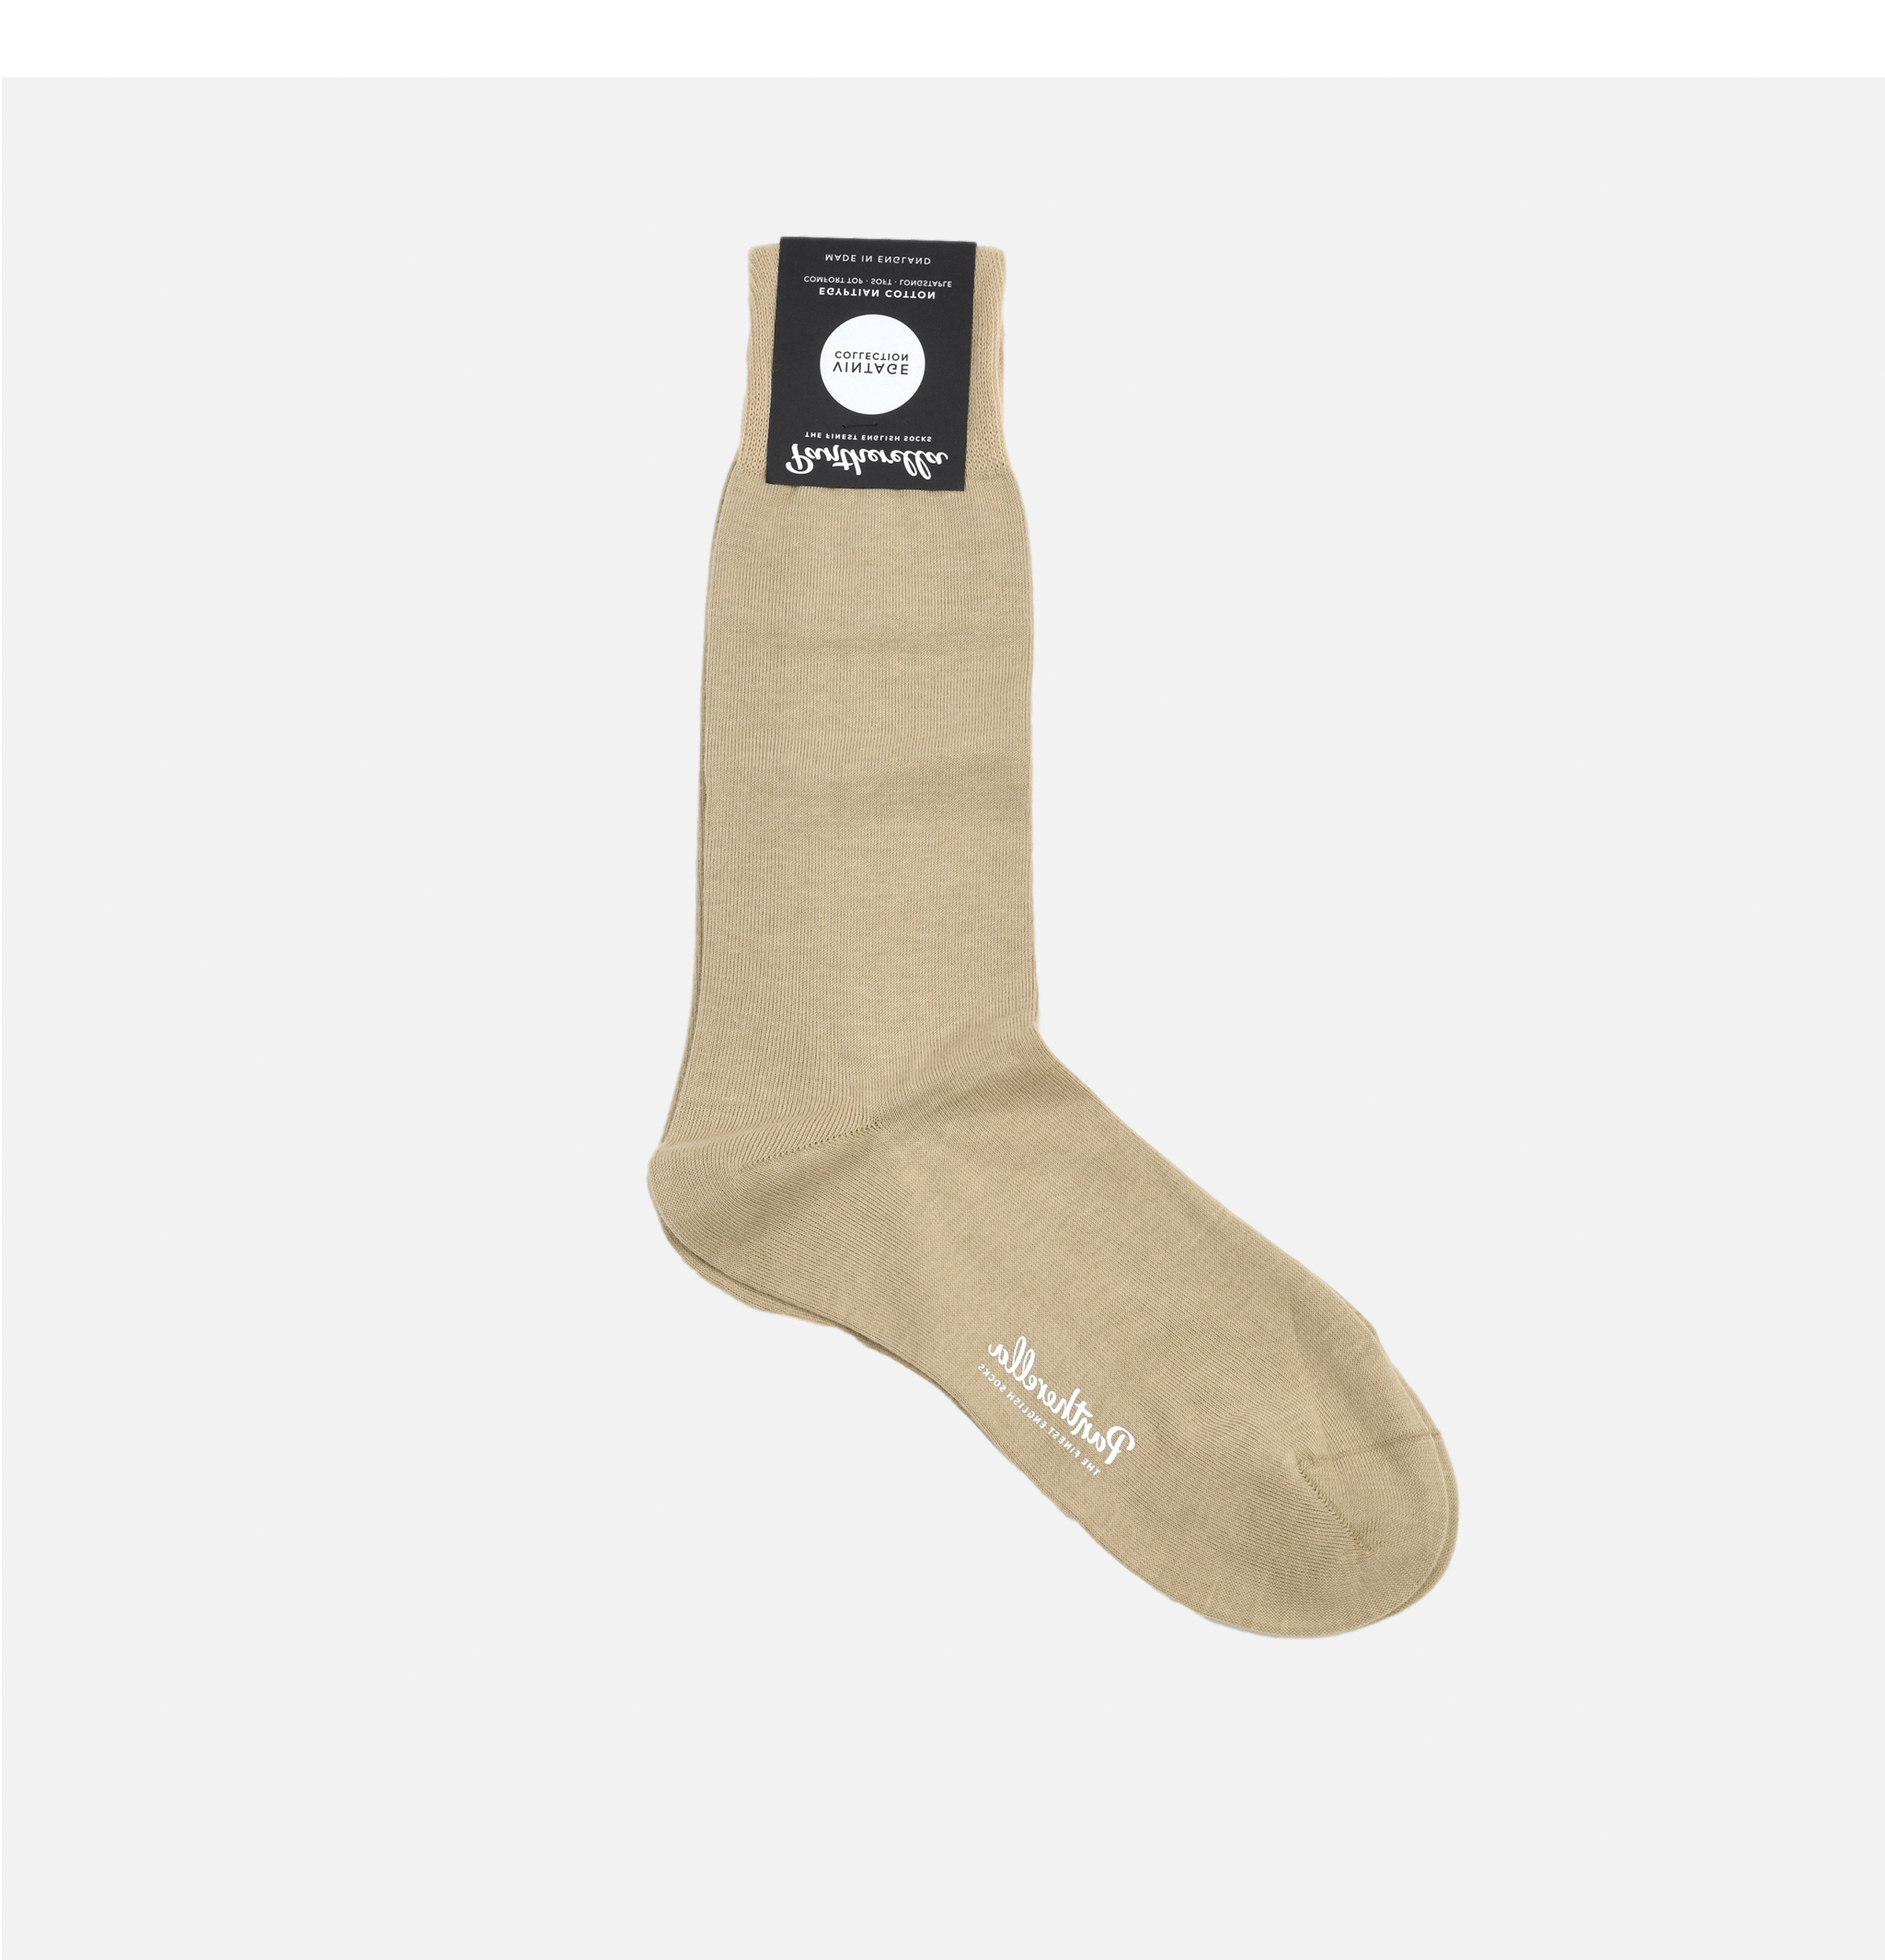 Pantherella Tavener Light Khaki socks